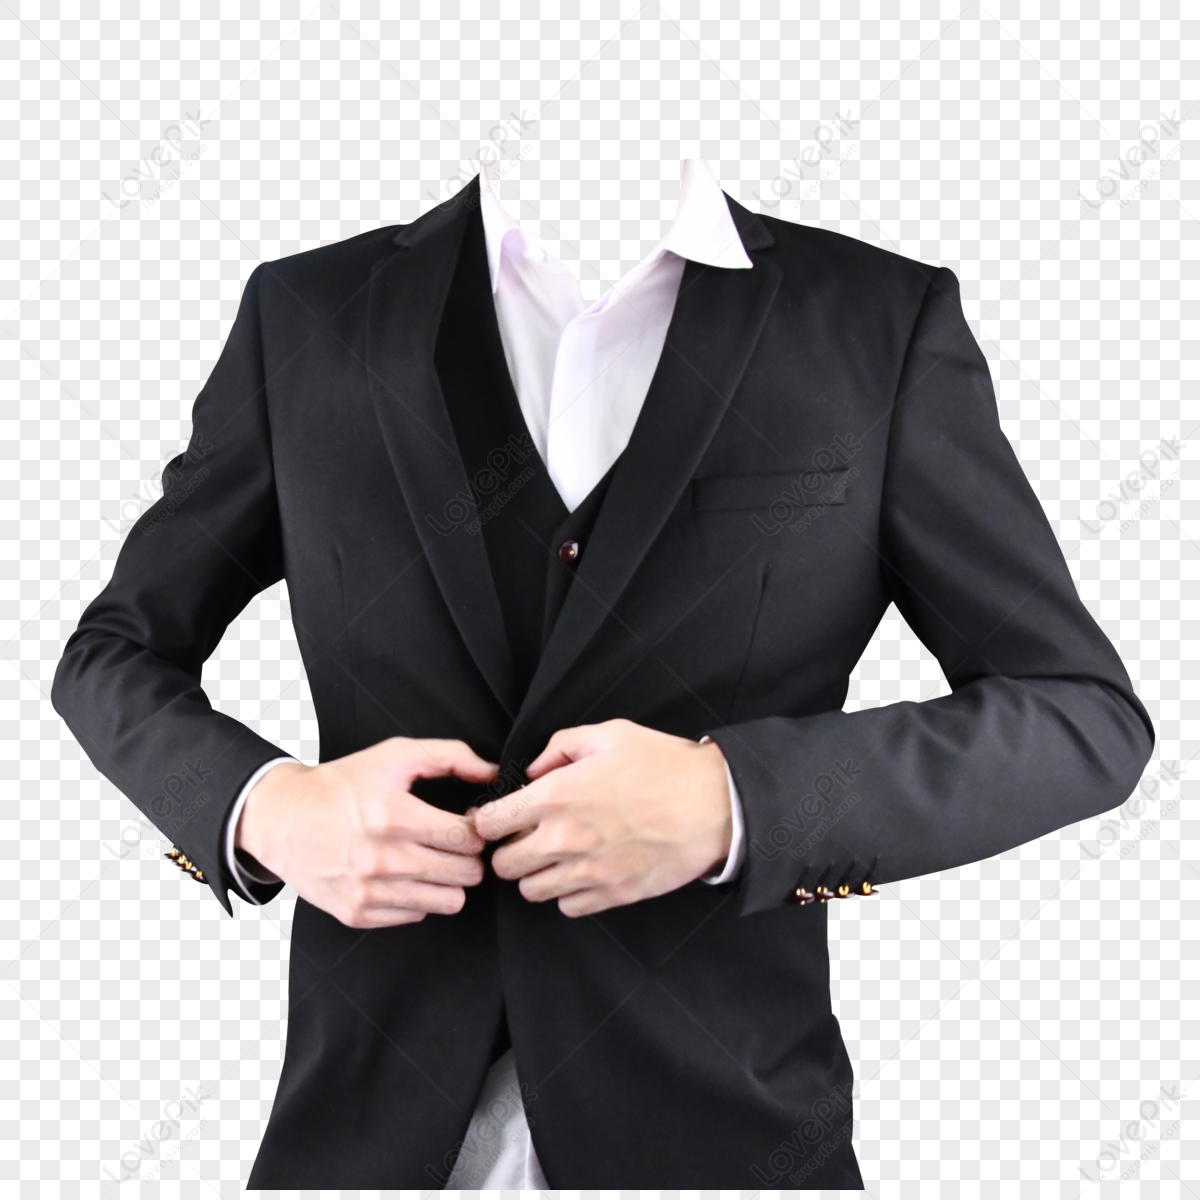 finishing the black suit,man,the man,arrange png image free download